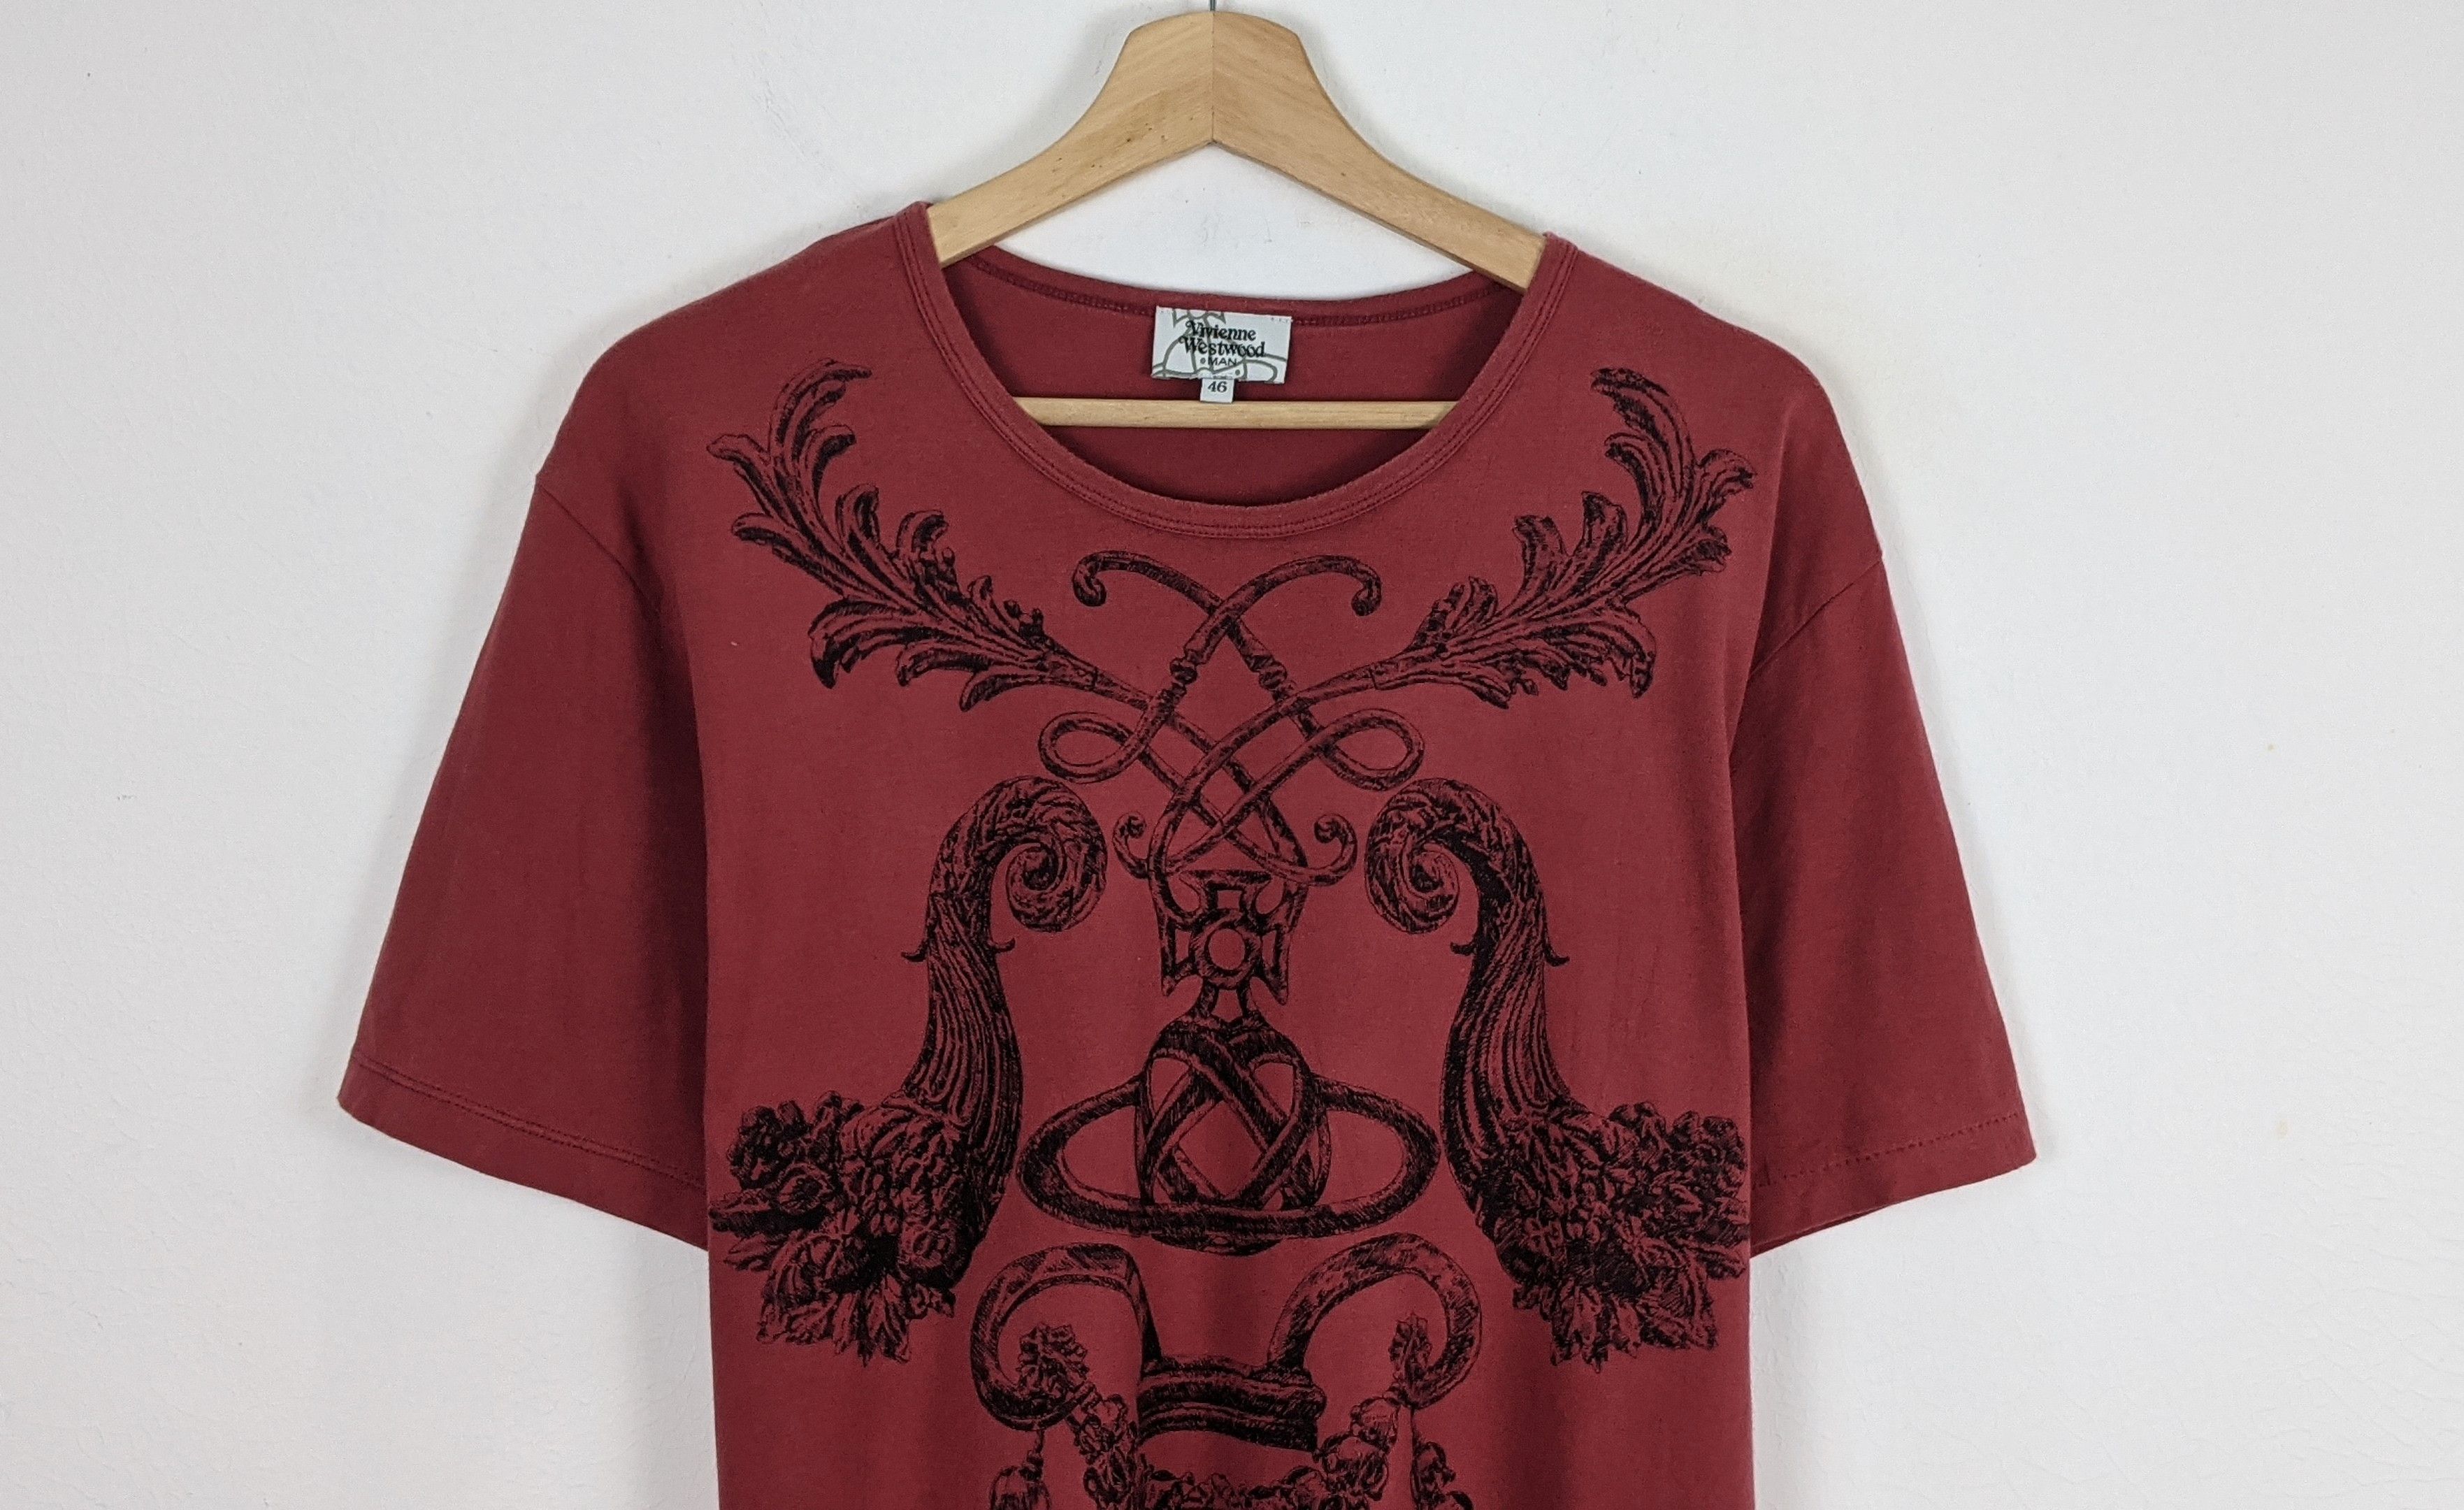 Vivienne Westwood Man shirt - 2